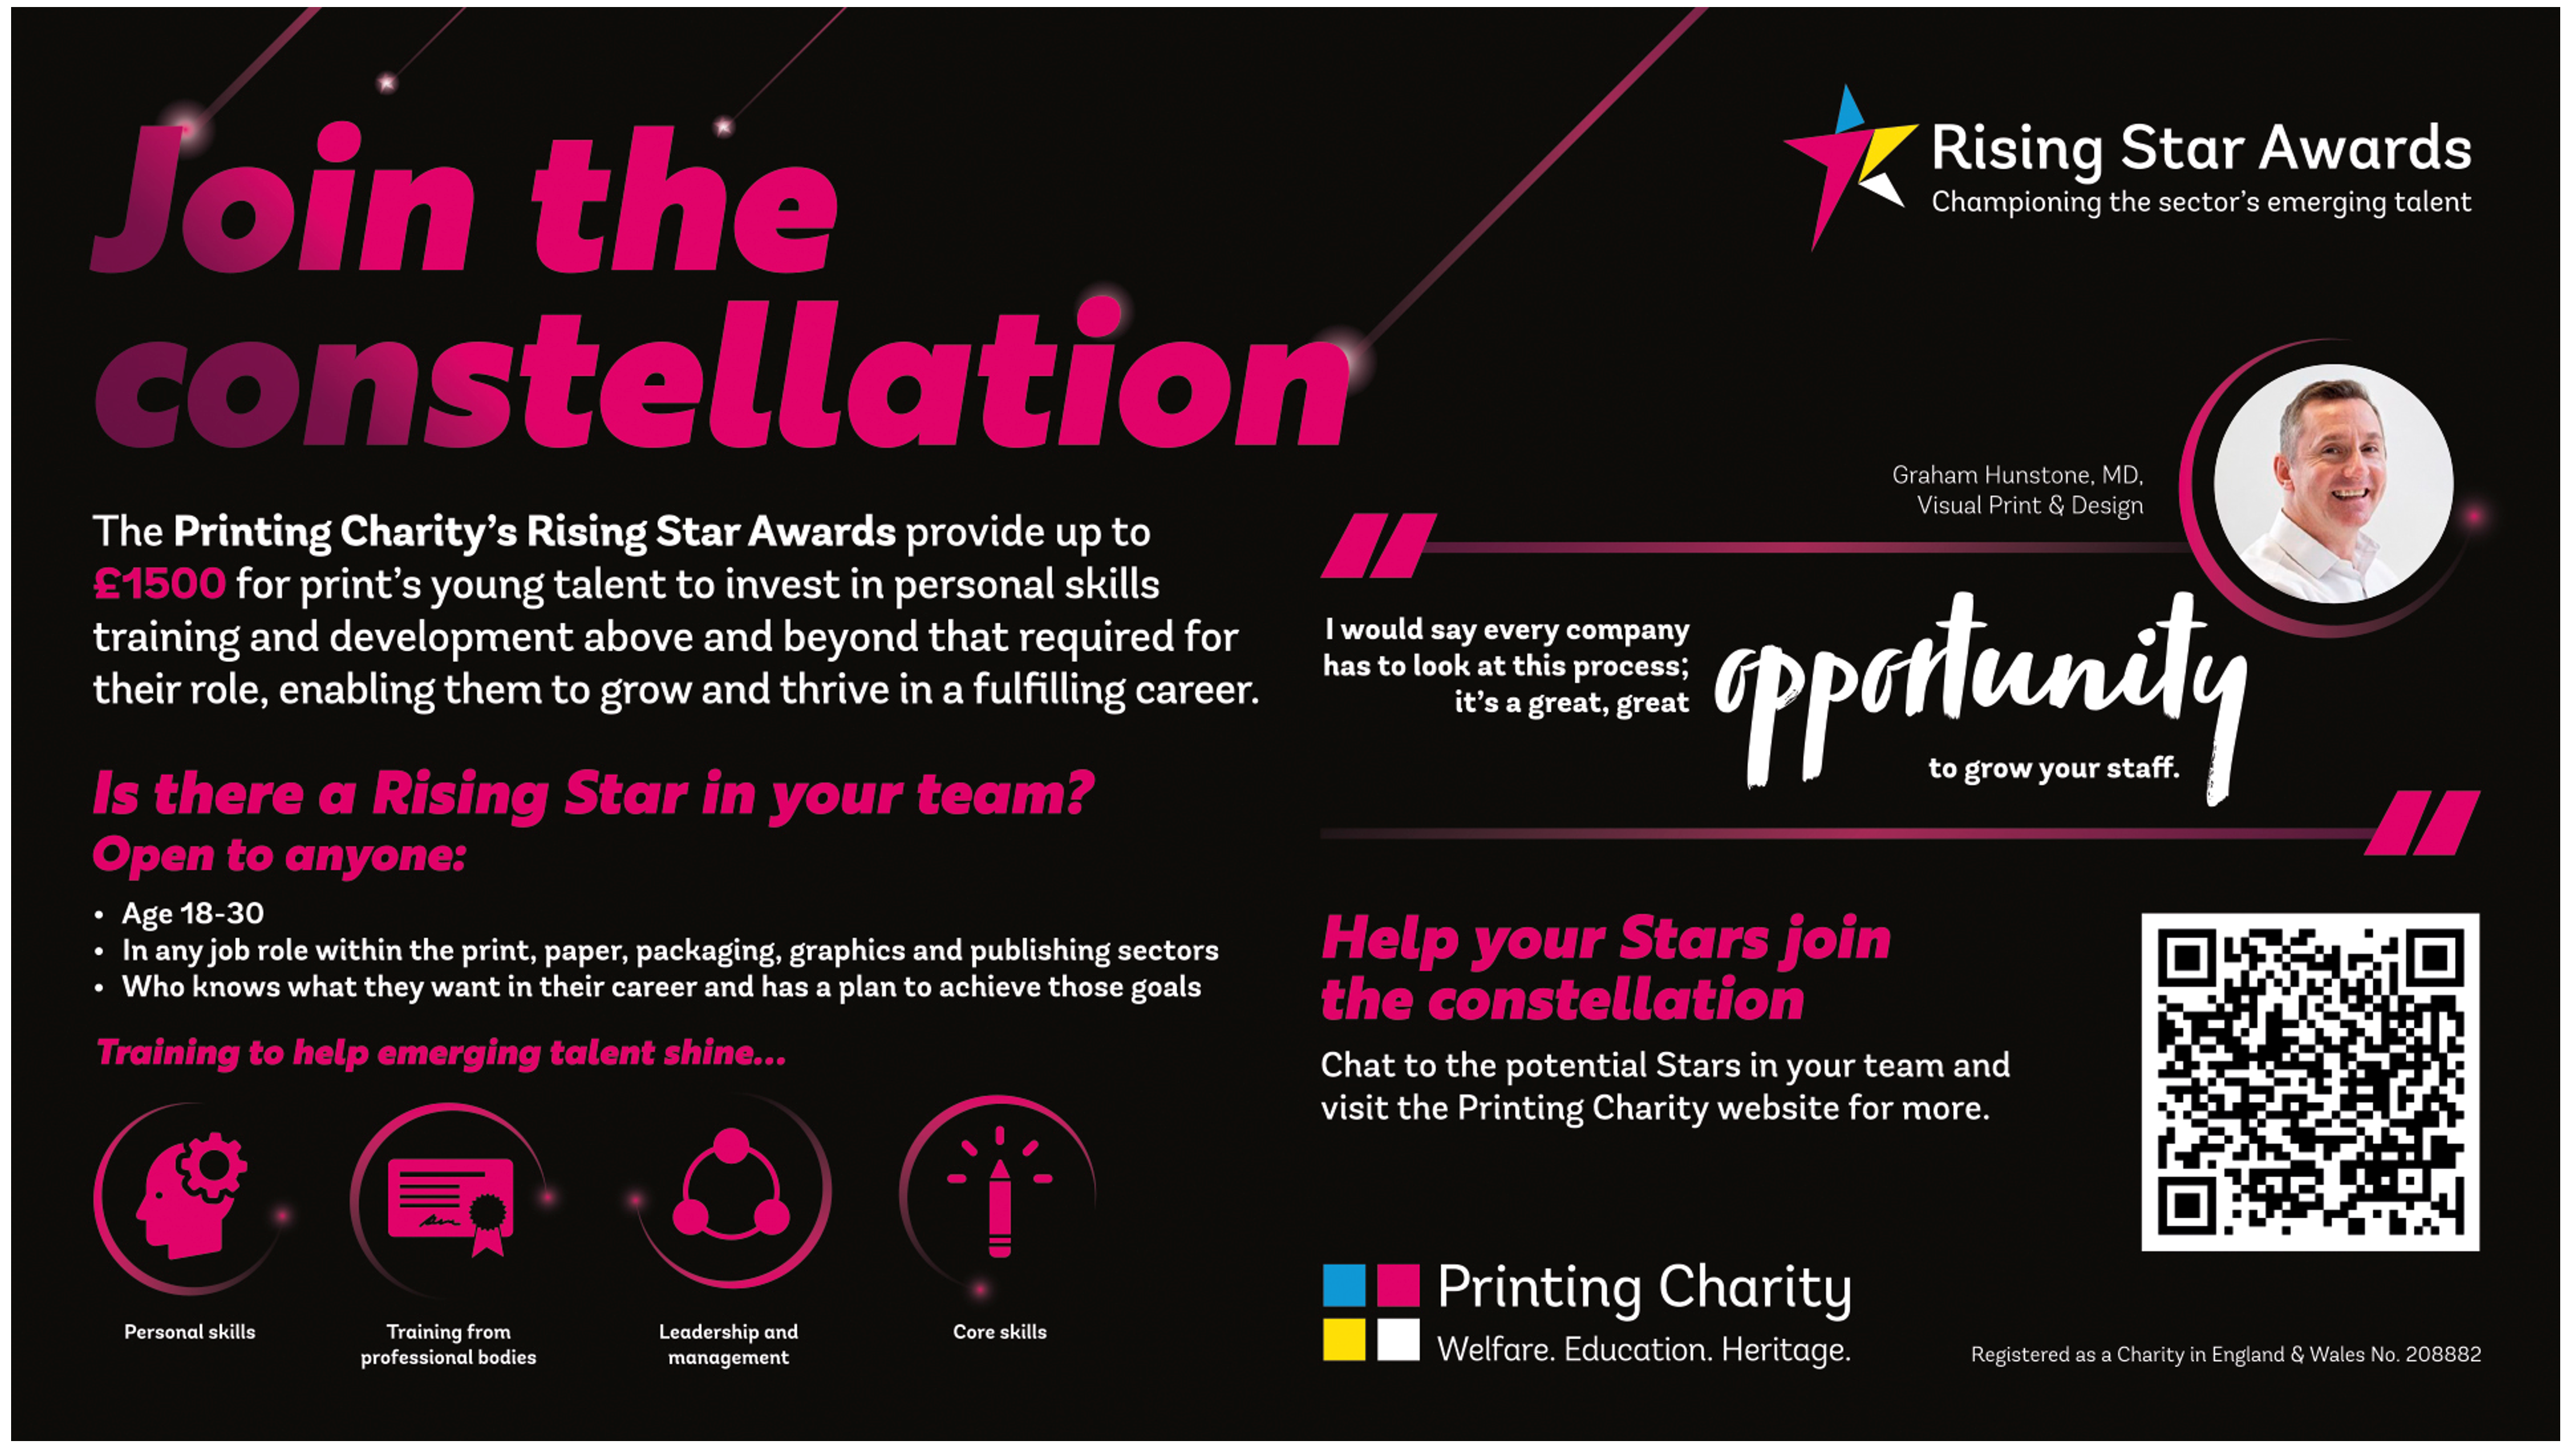 RISING STAR AWARD - The Learning Awards